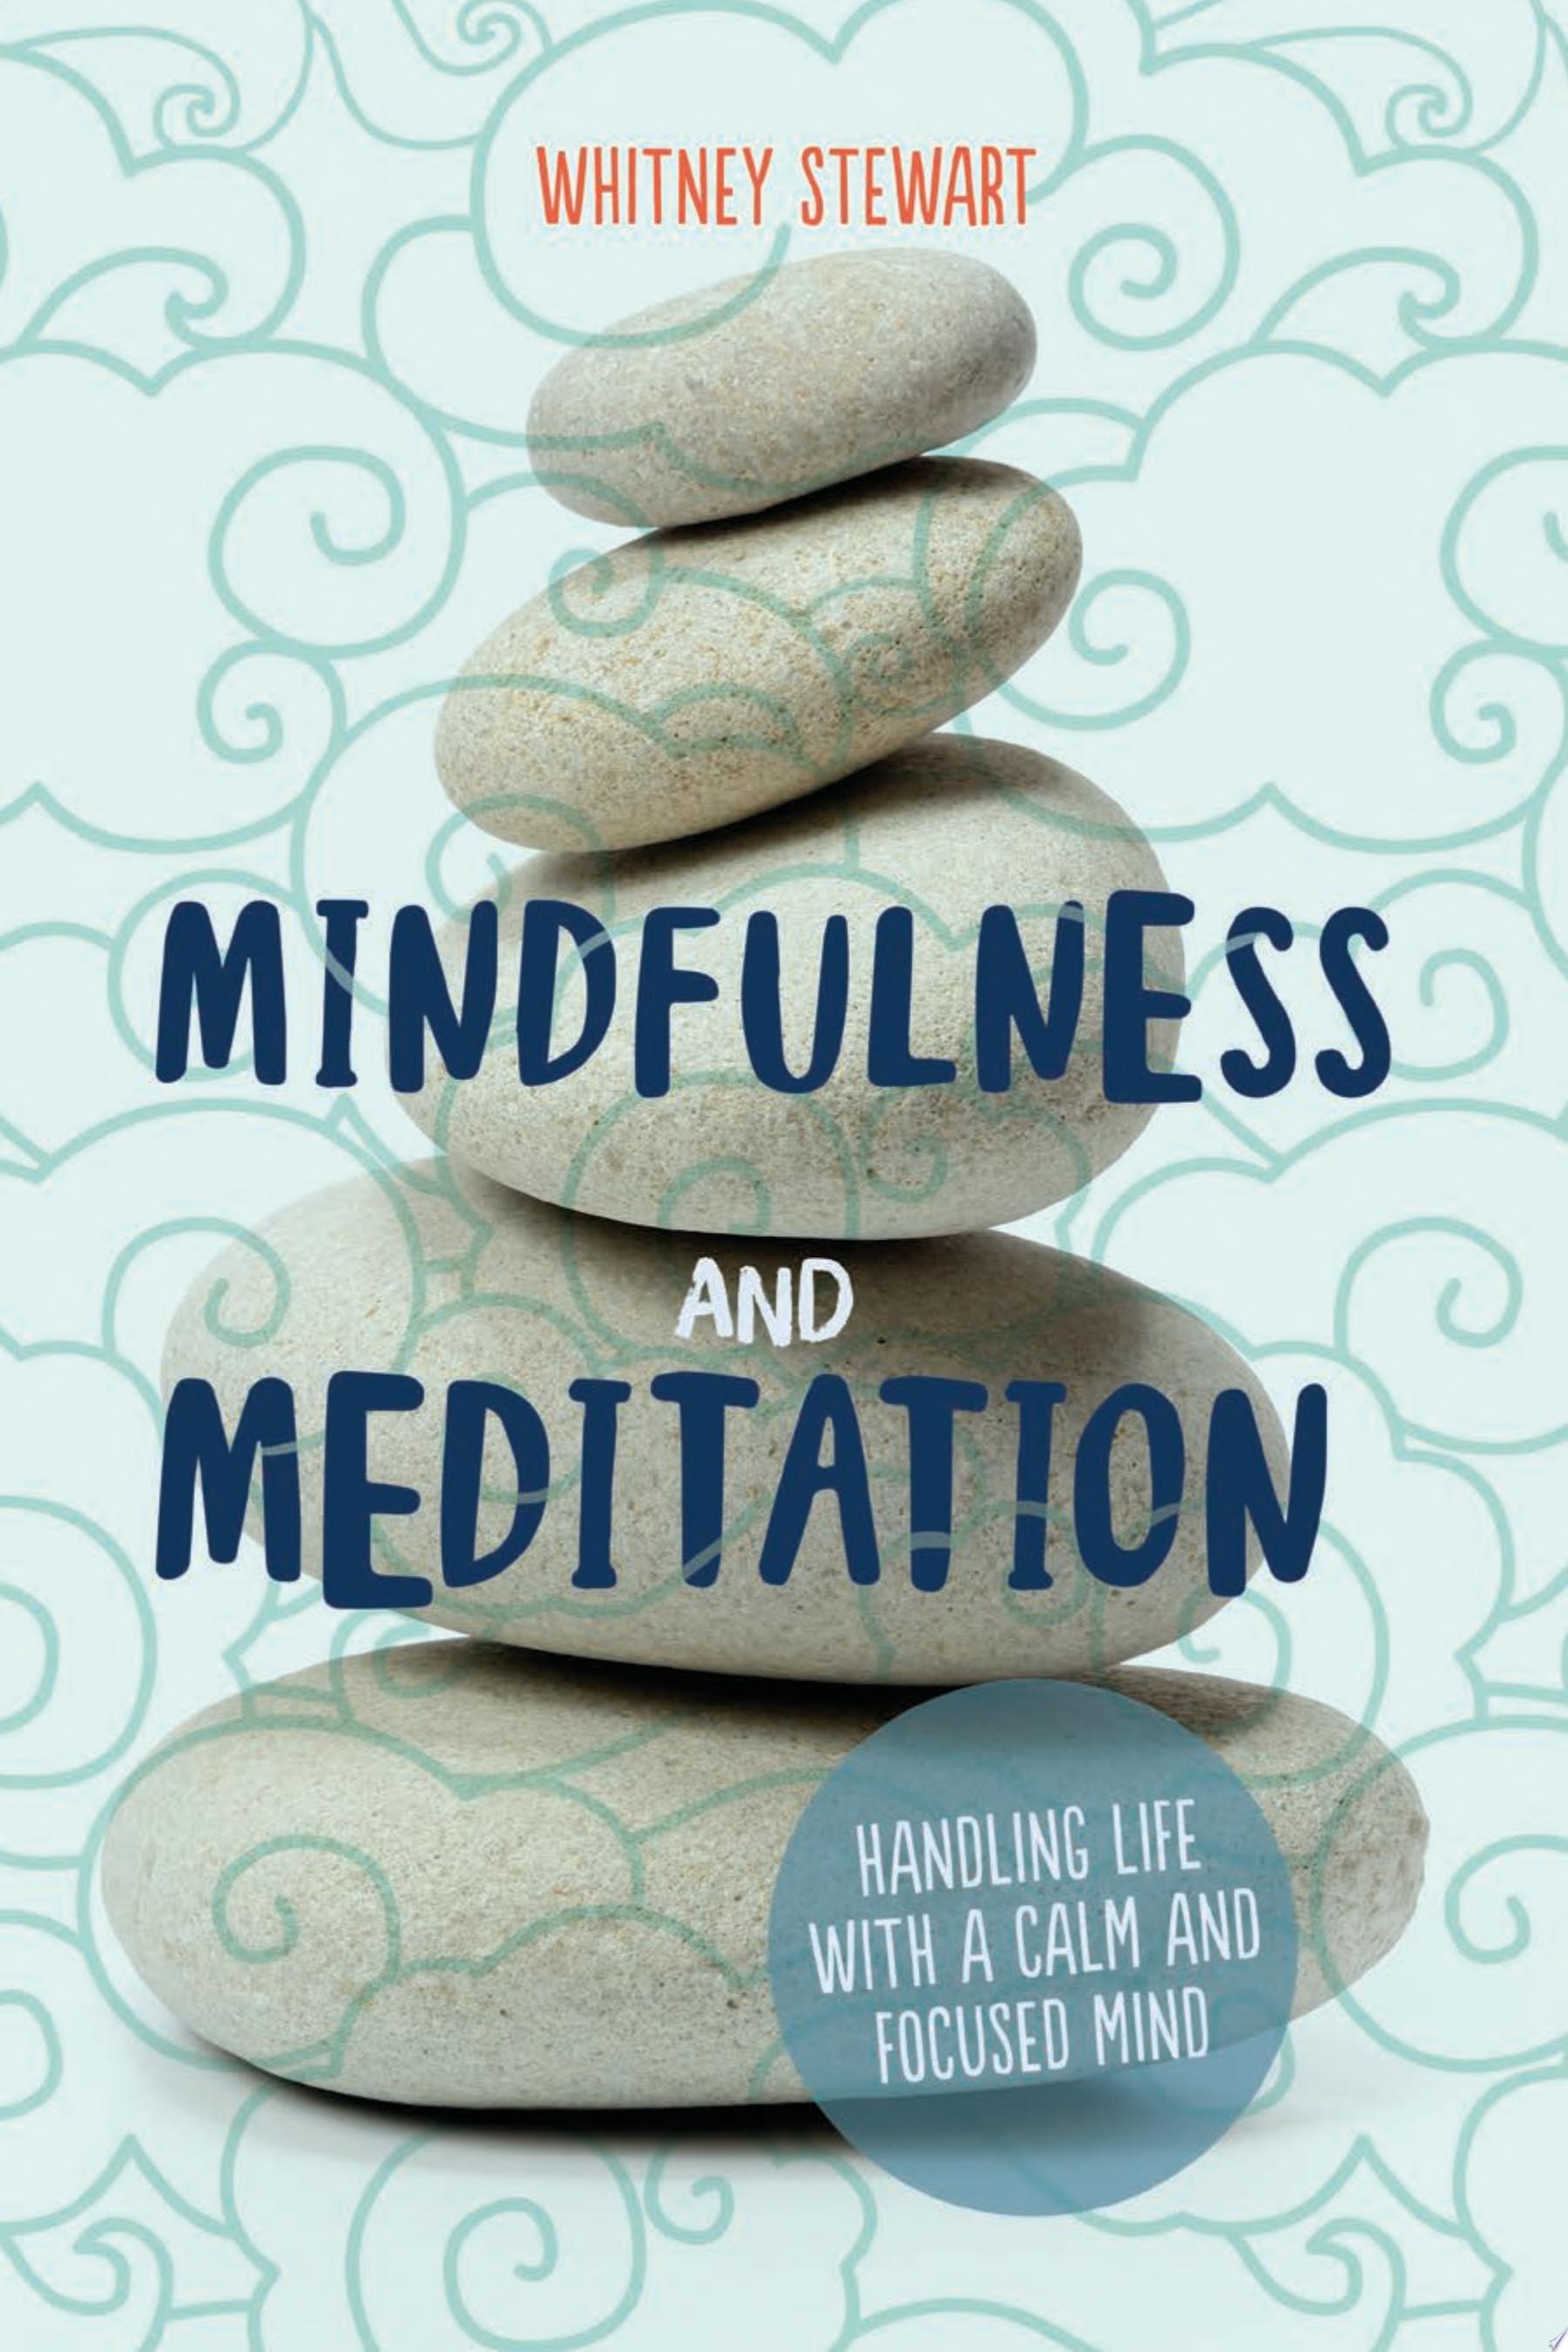 Image for "Mindfulness and Meditation"